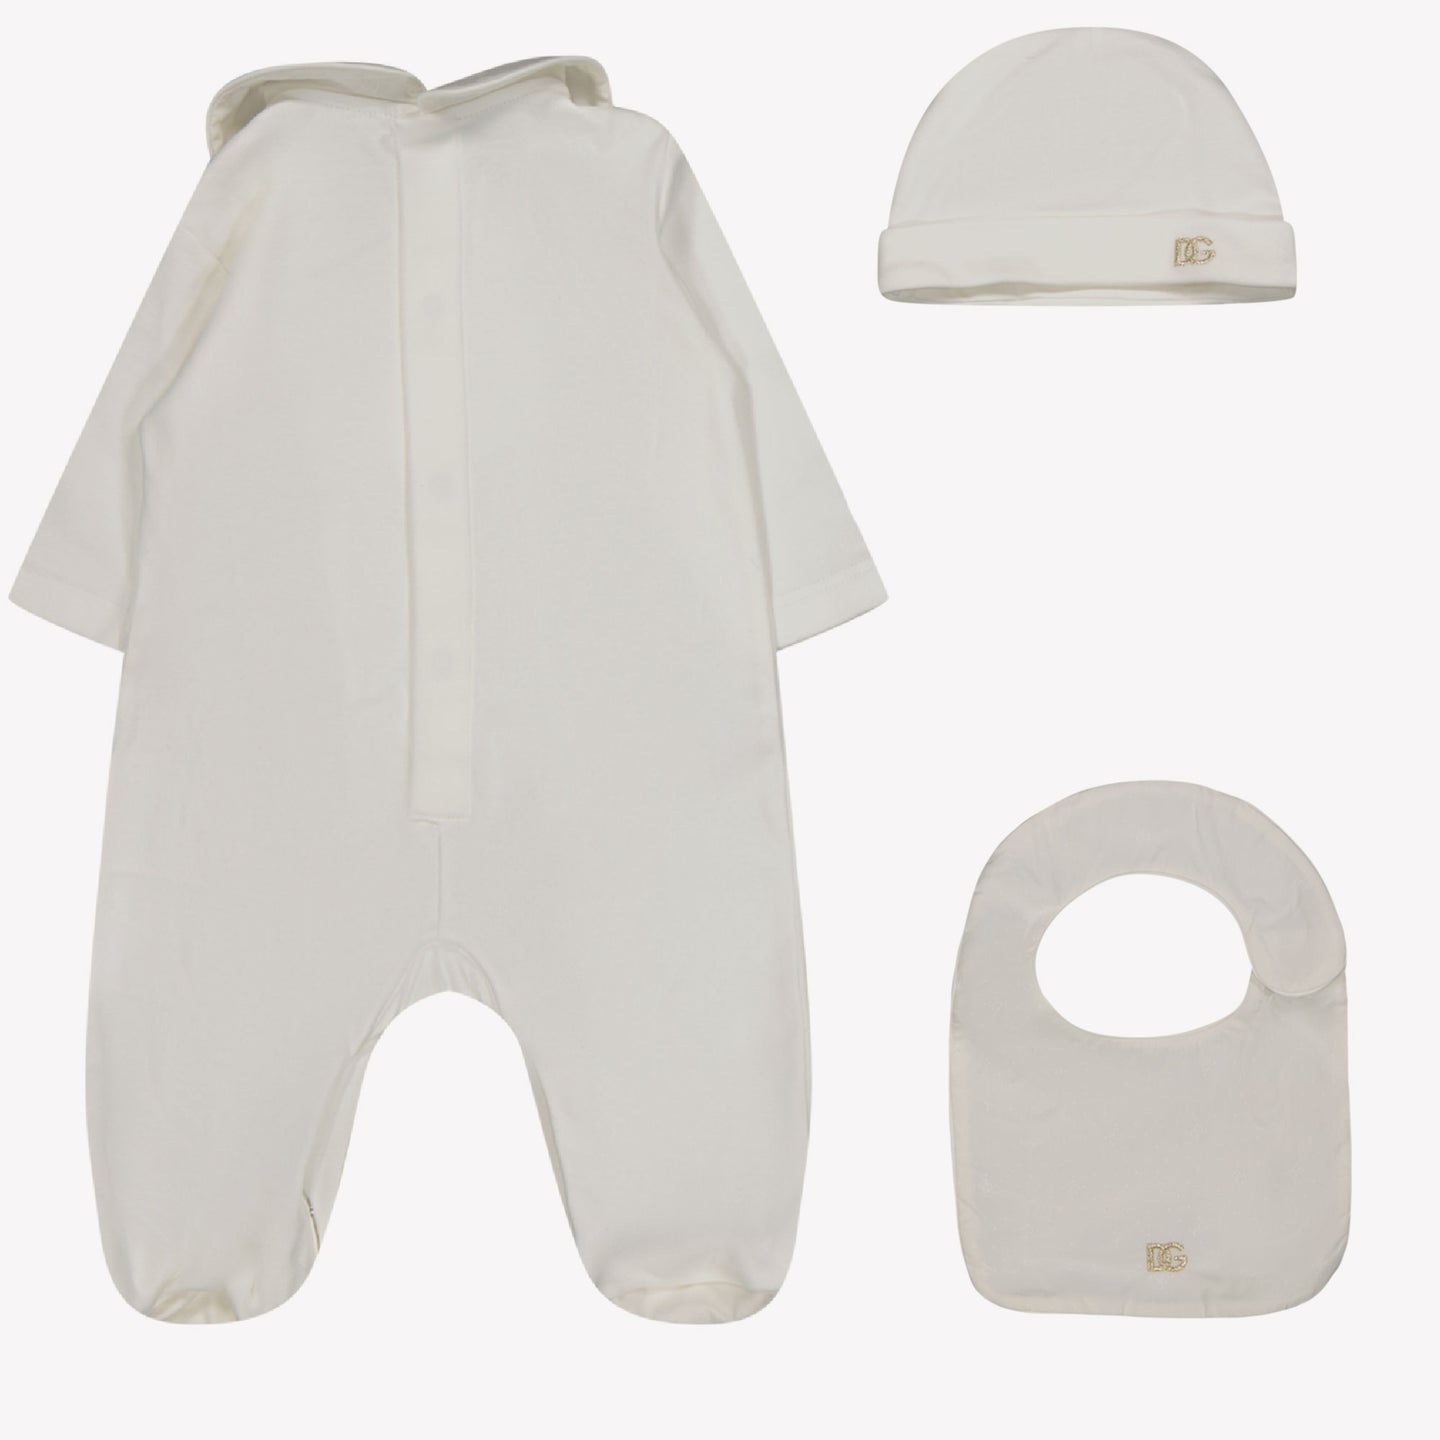 Dolce & Gabbana Baby unisex box suit White